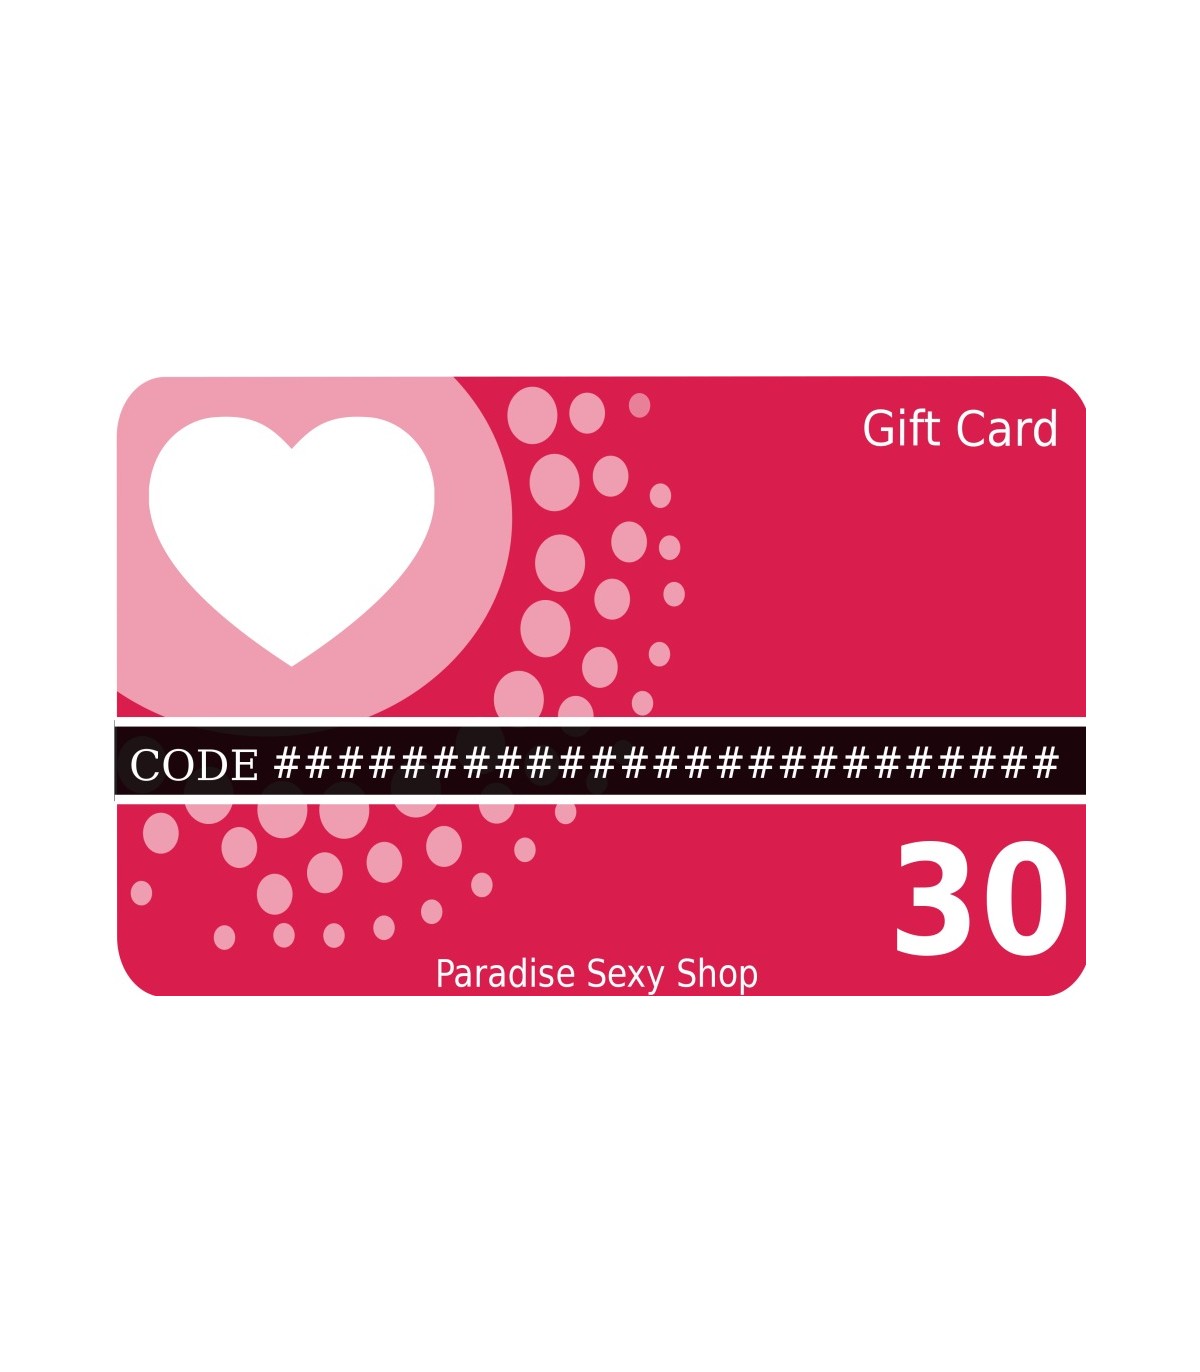 Gift card 30